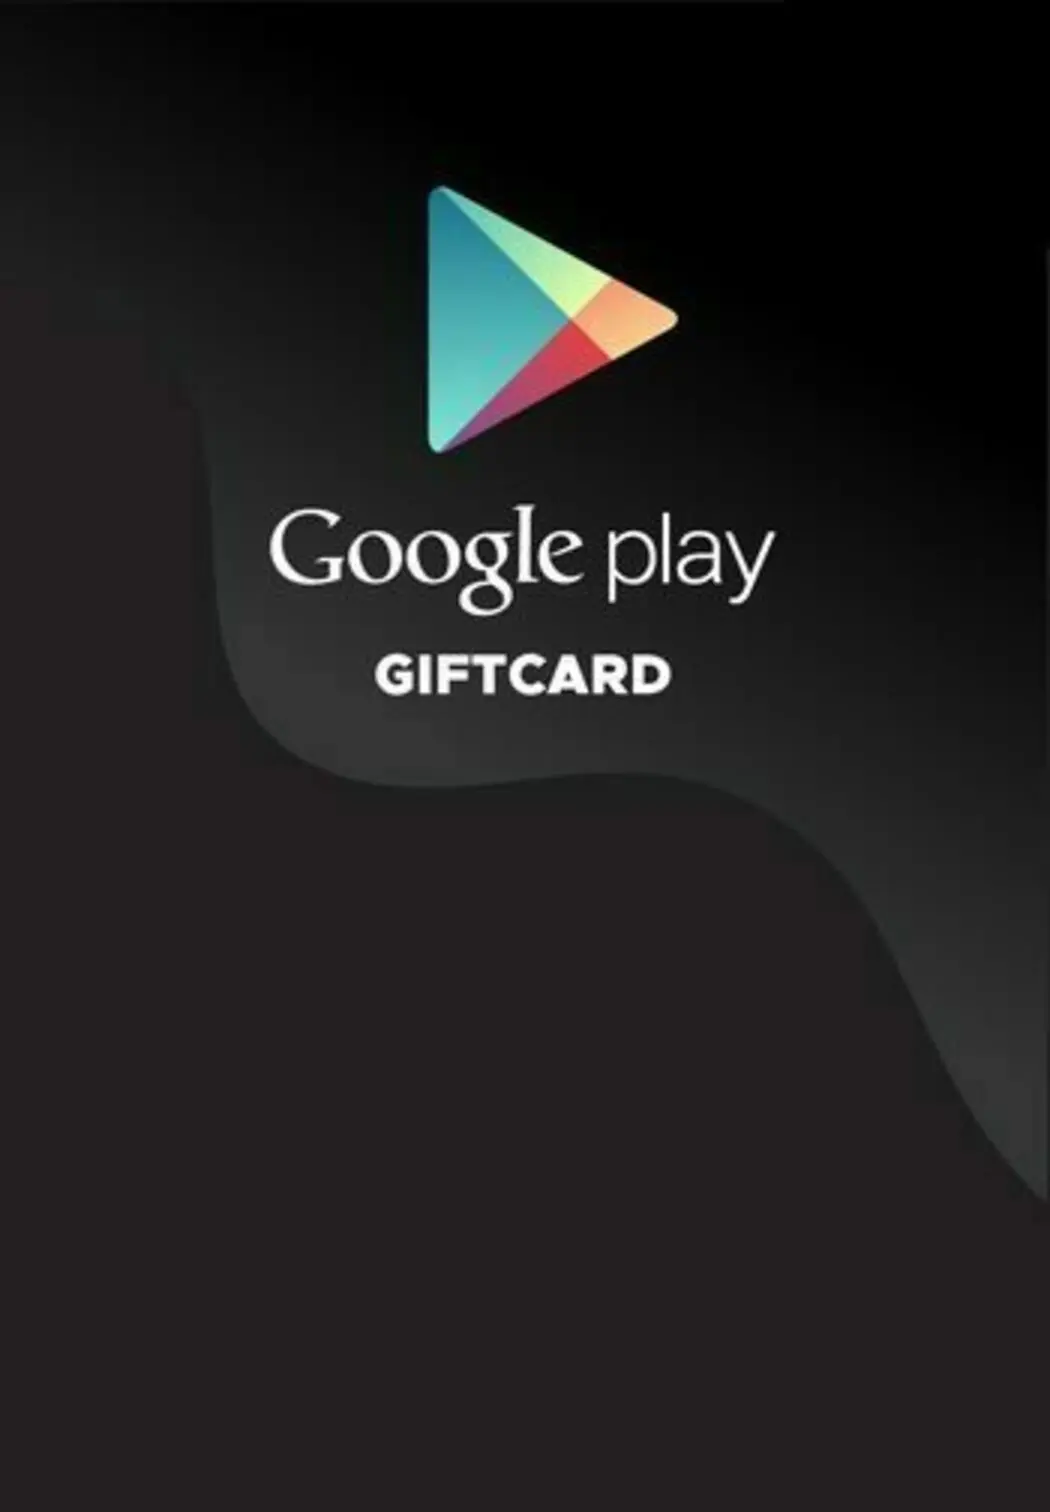 Google Play €80 EUR Gift Card (IT) - Digital Code